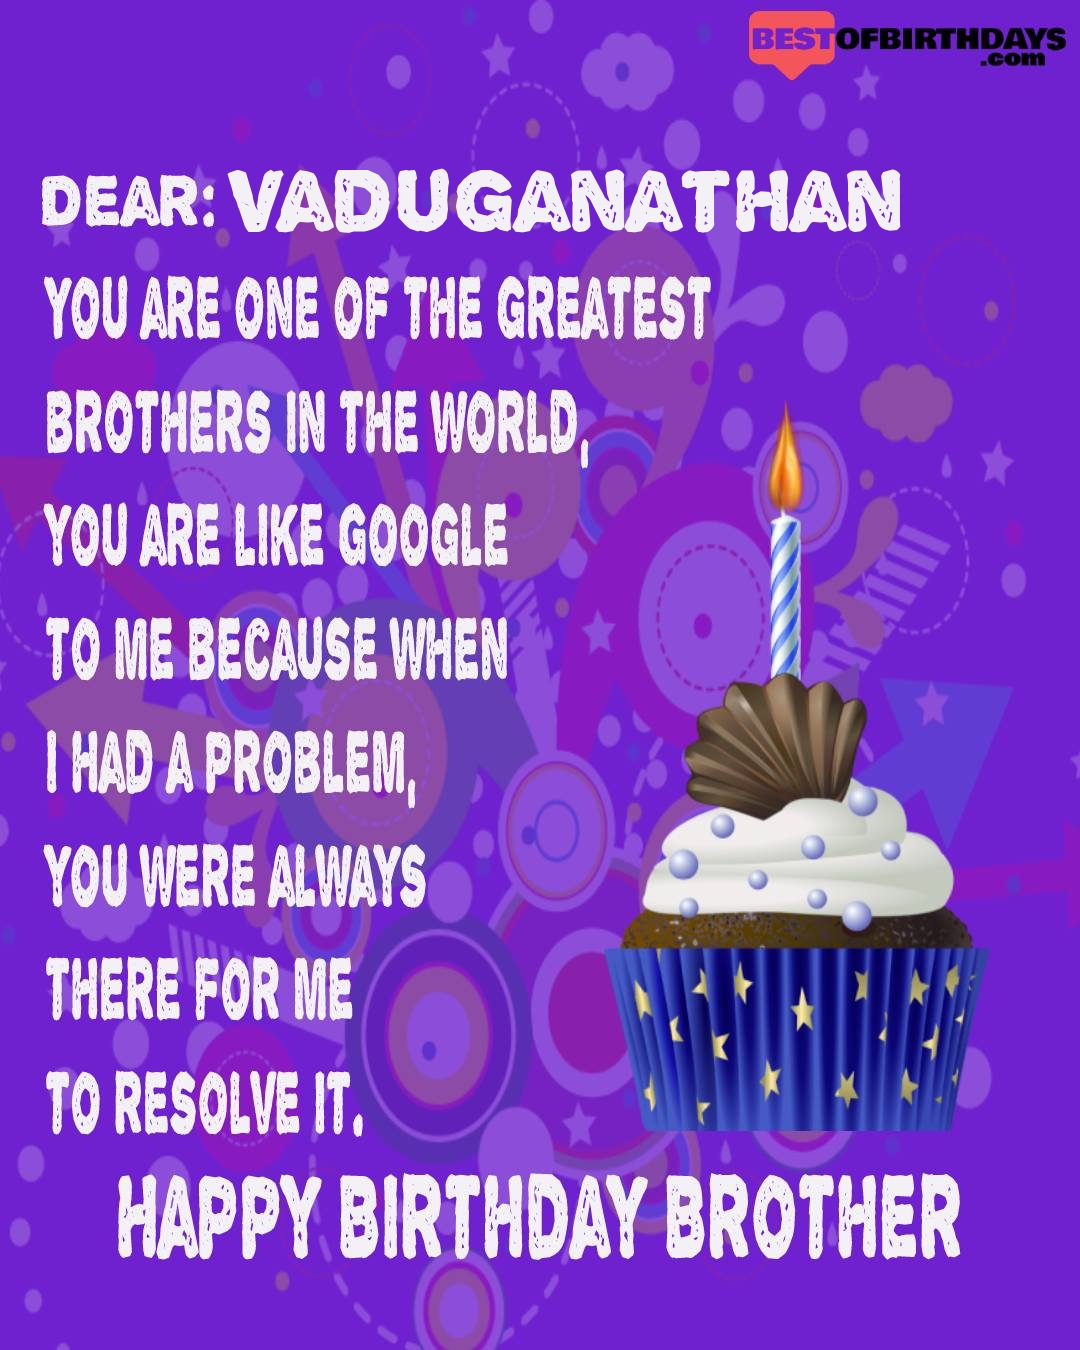 Happy birthday vaduganathan bhai brother bro